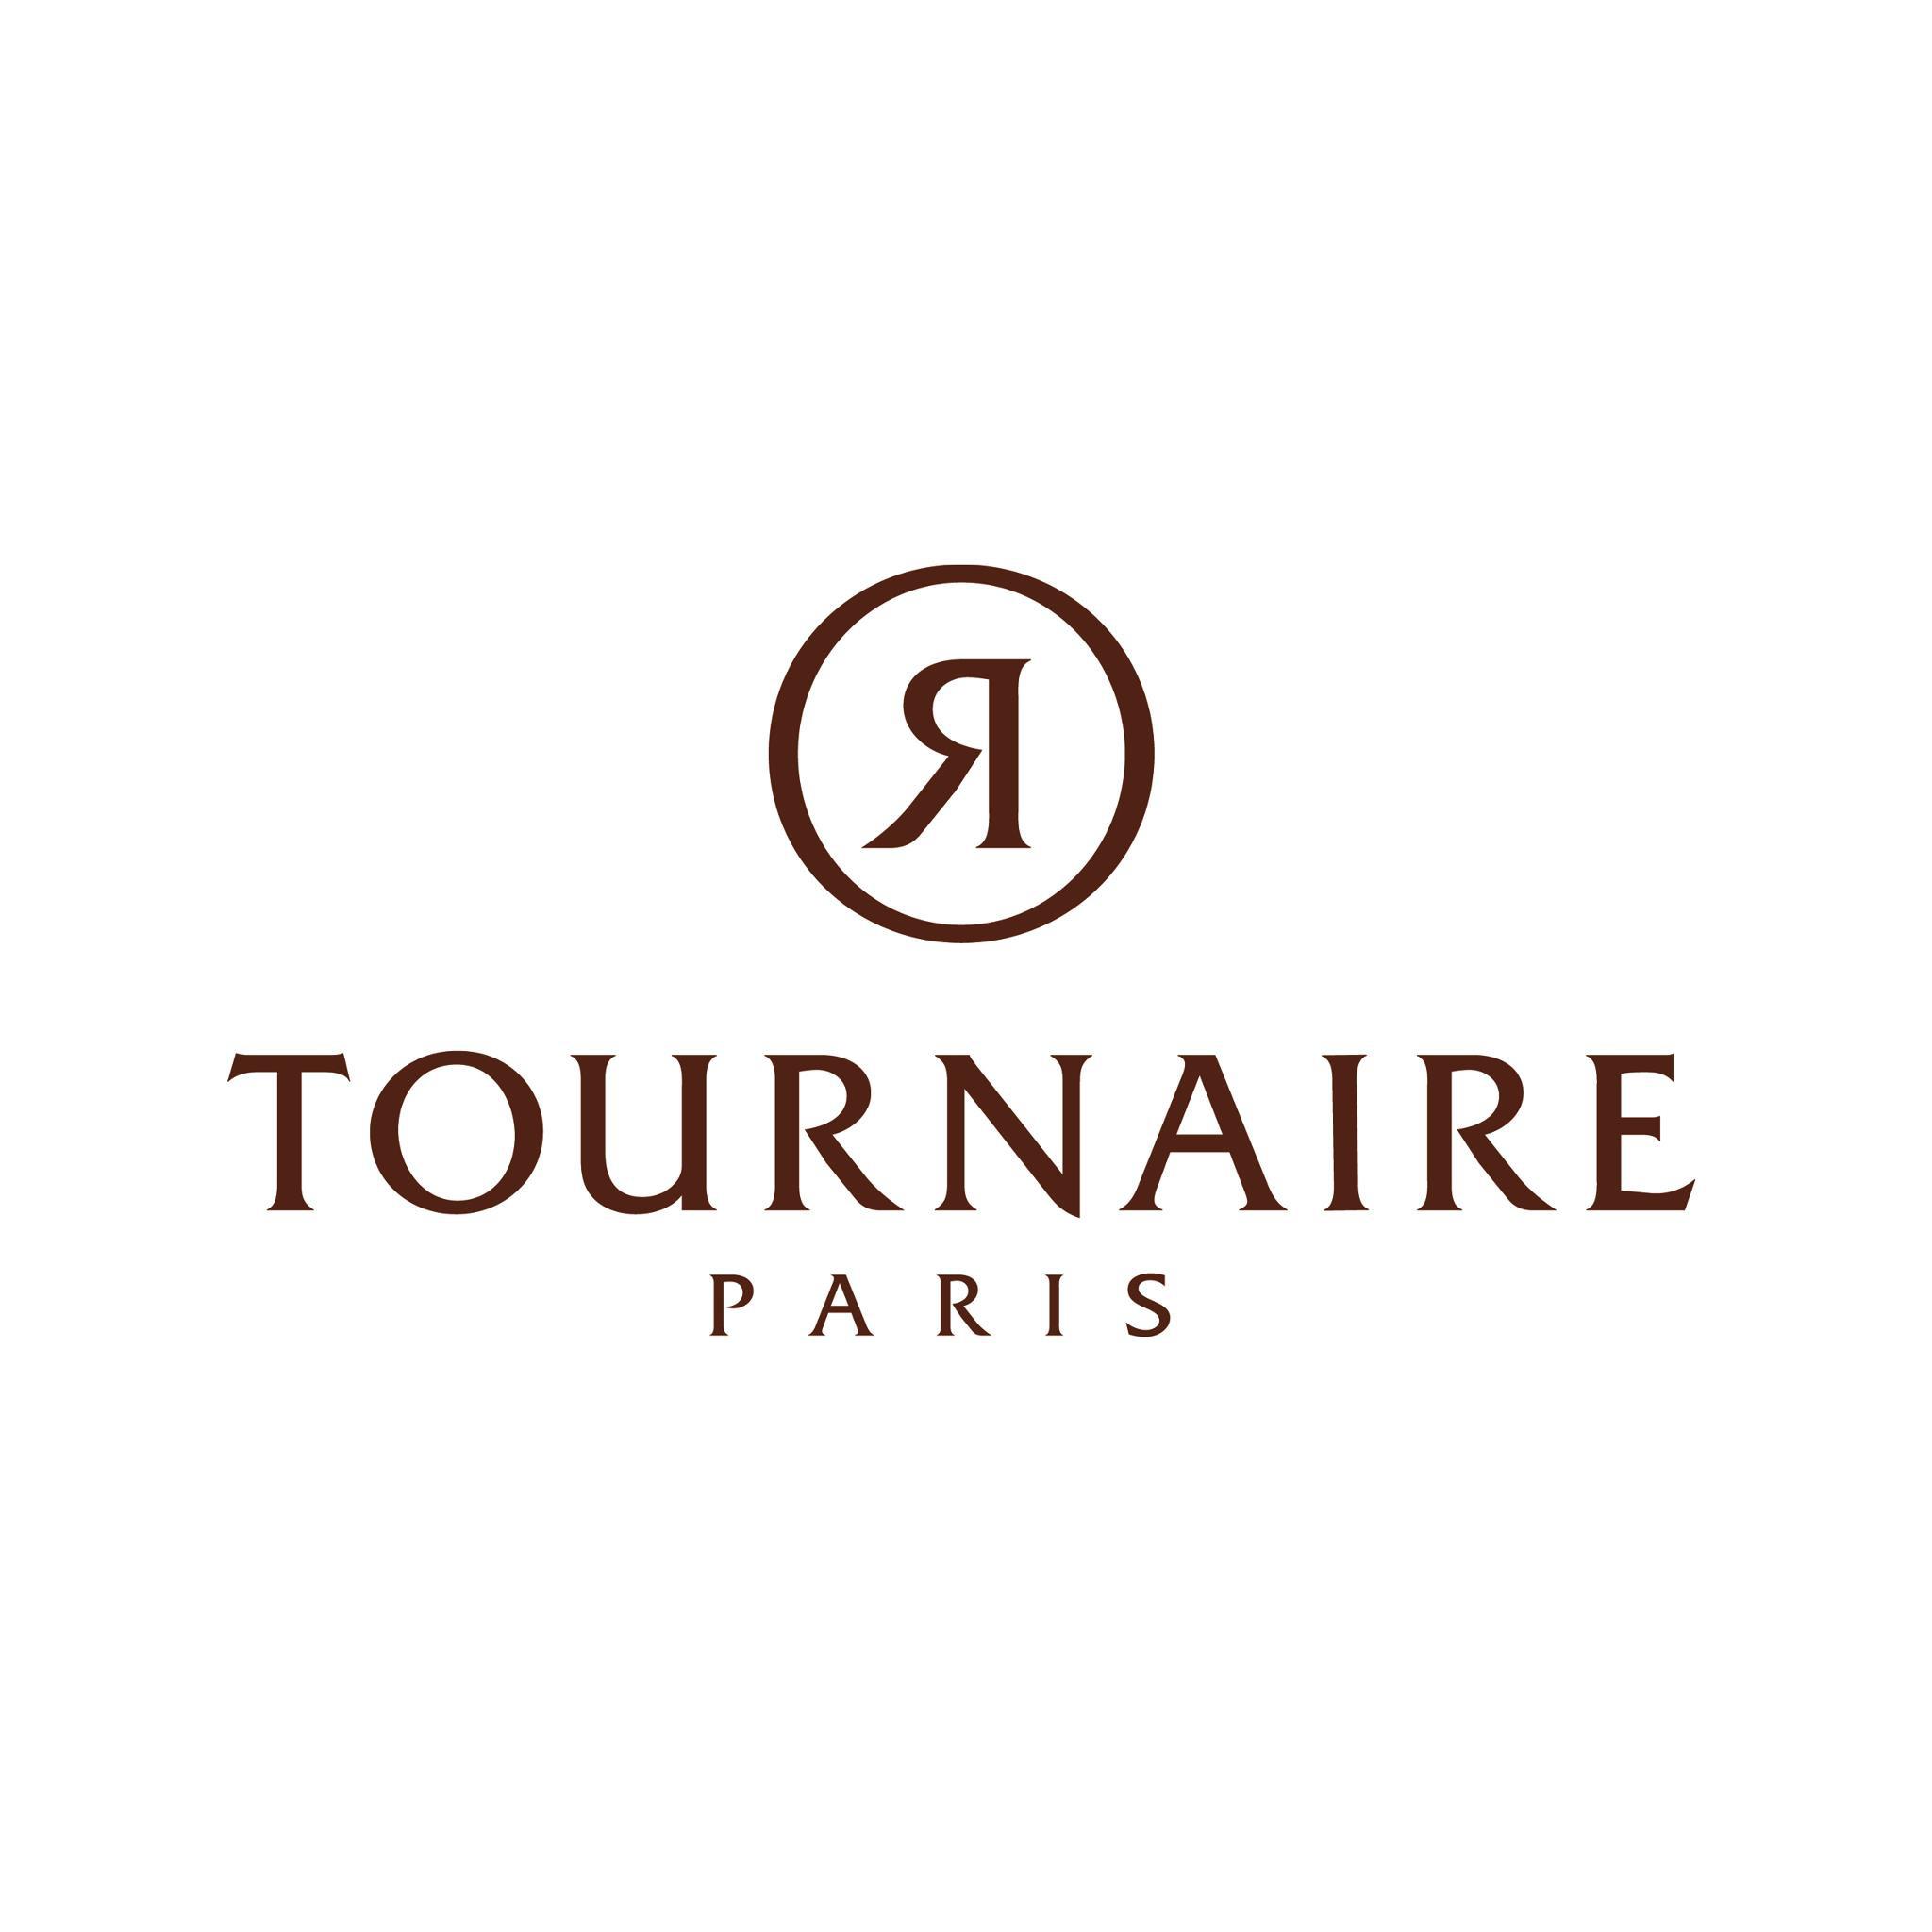 Tournaire Paris